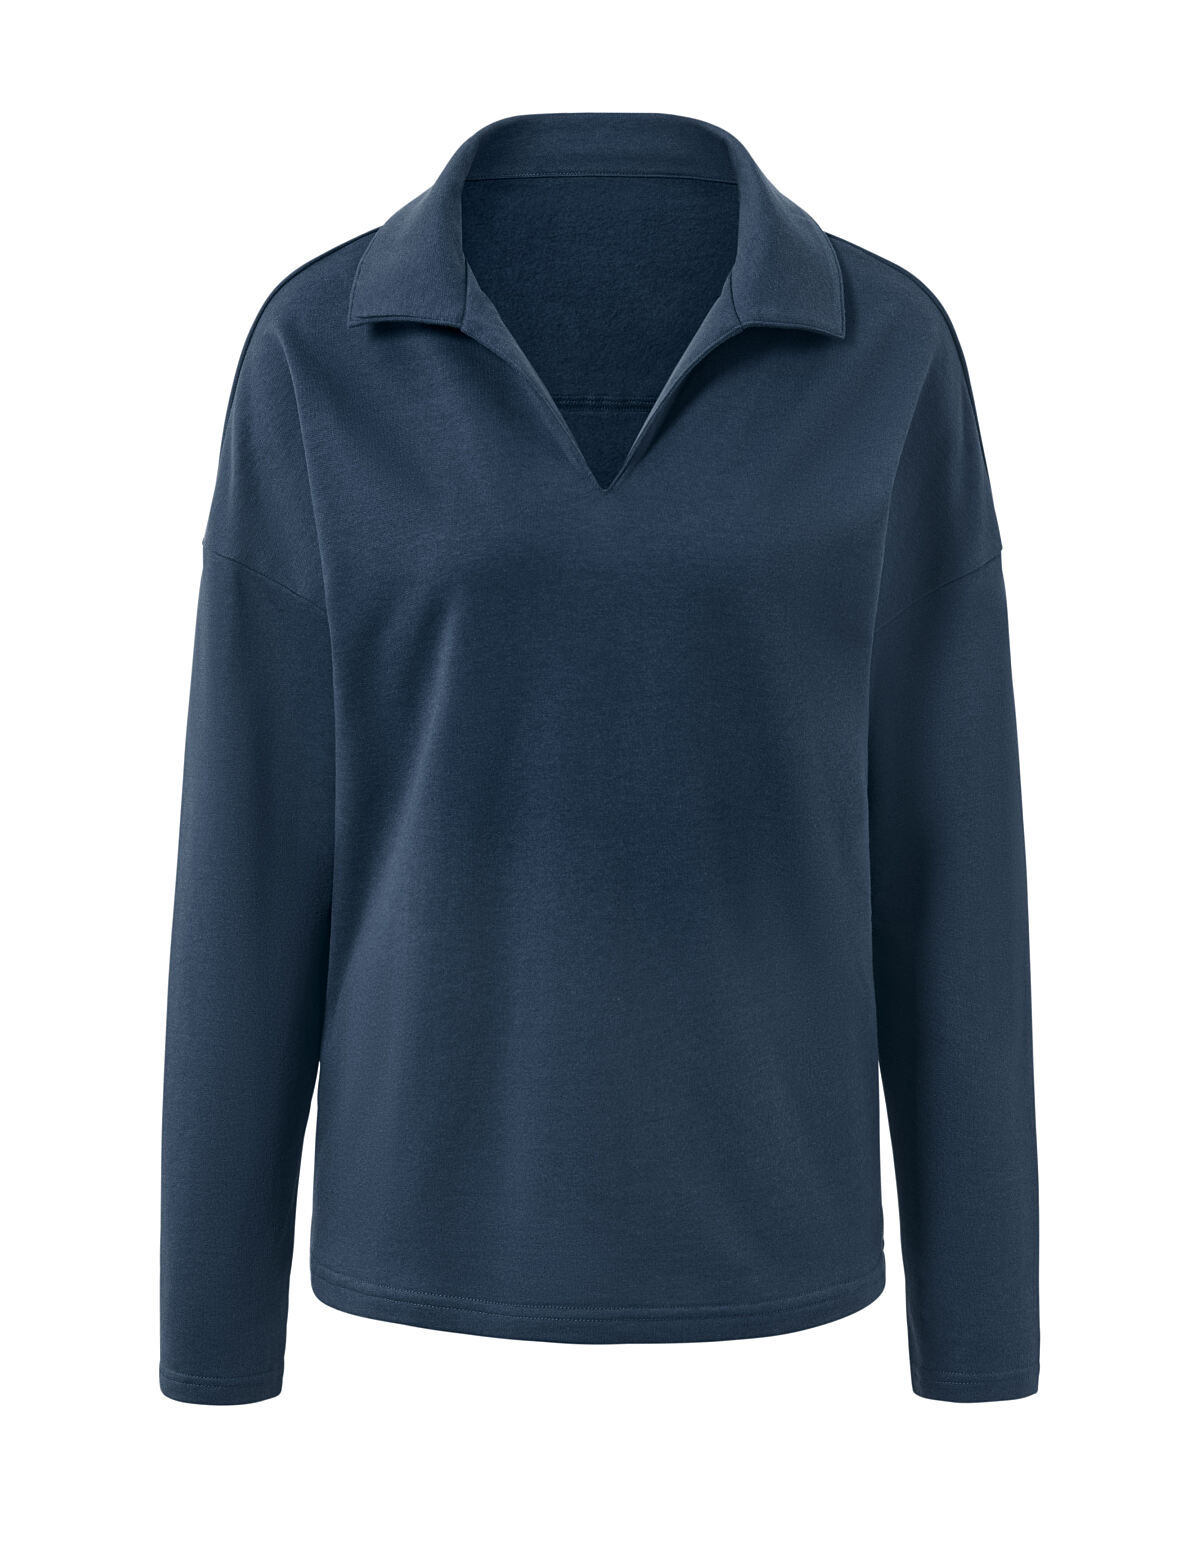 133147 LoungeSweater Blau FS 1 51.23